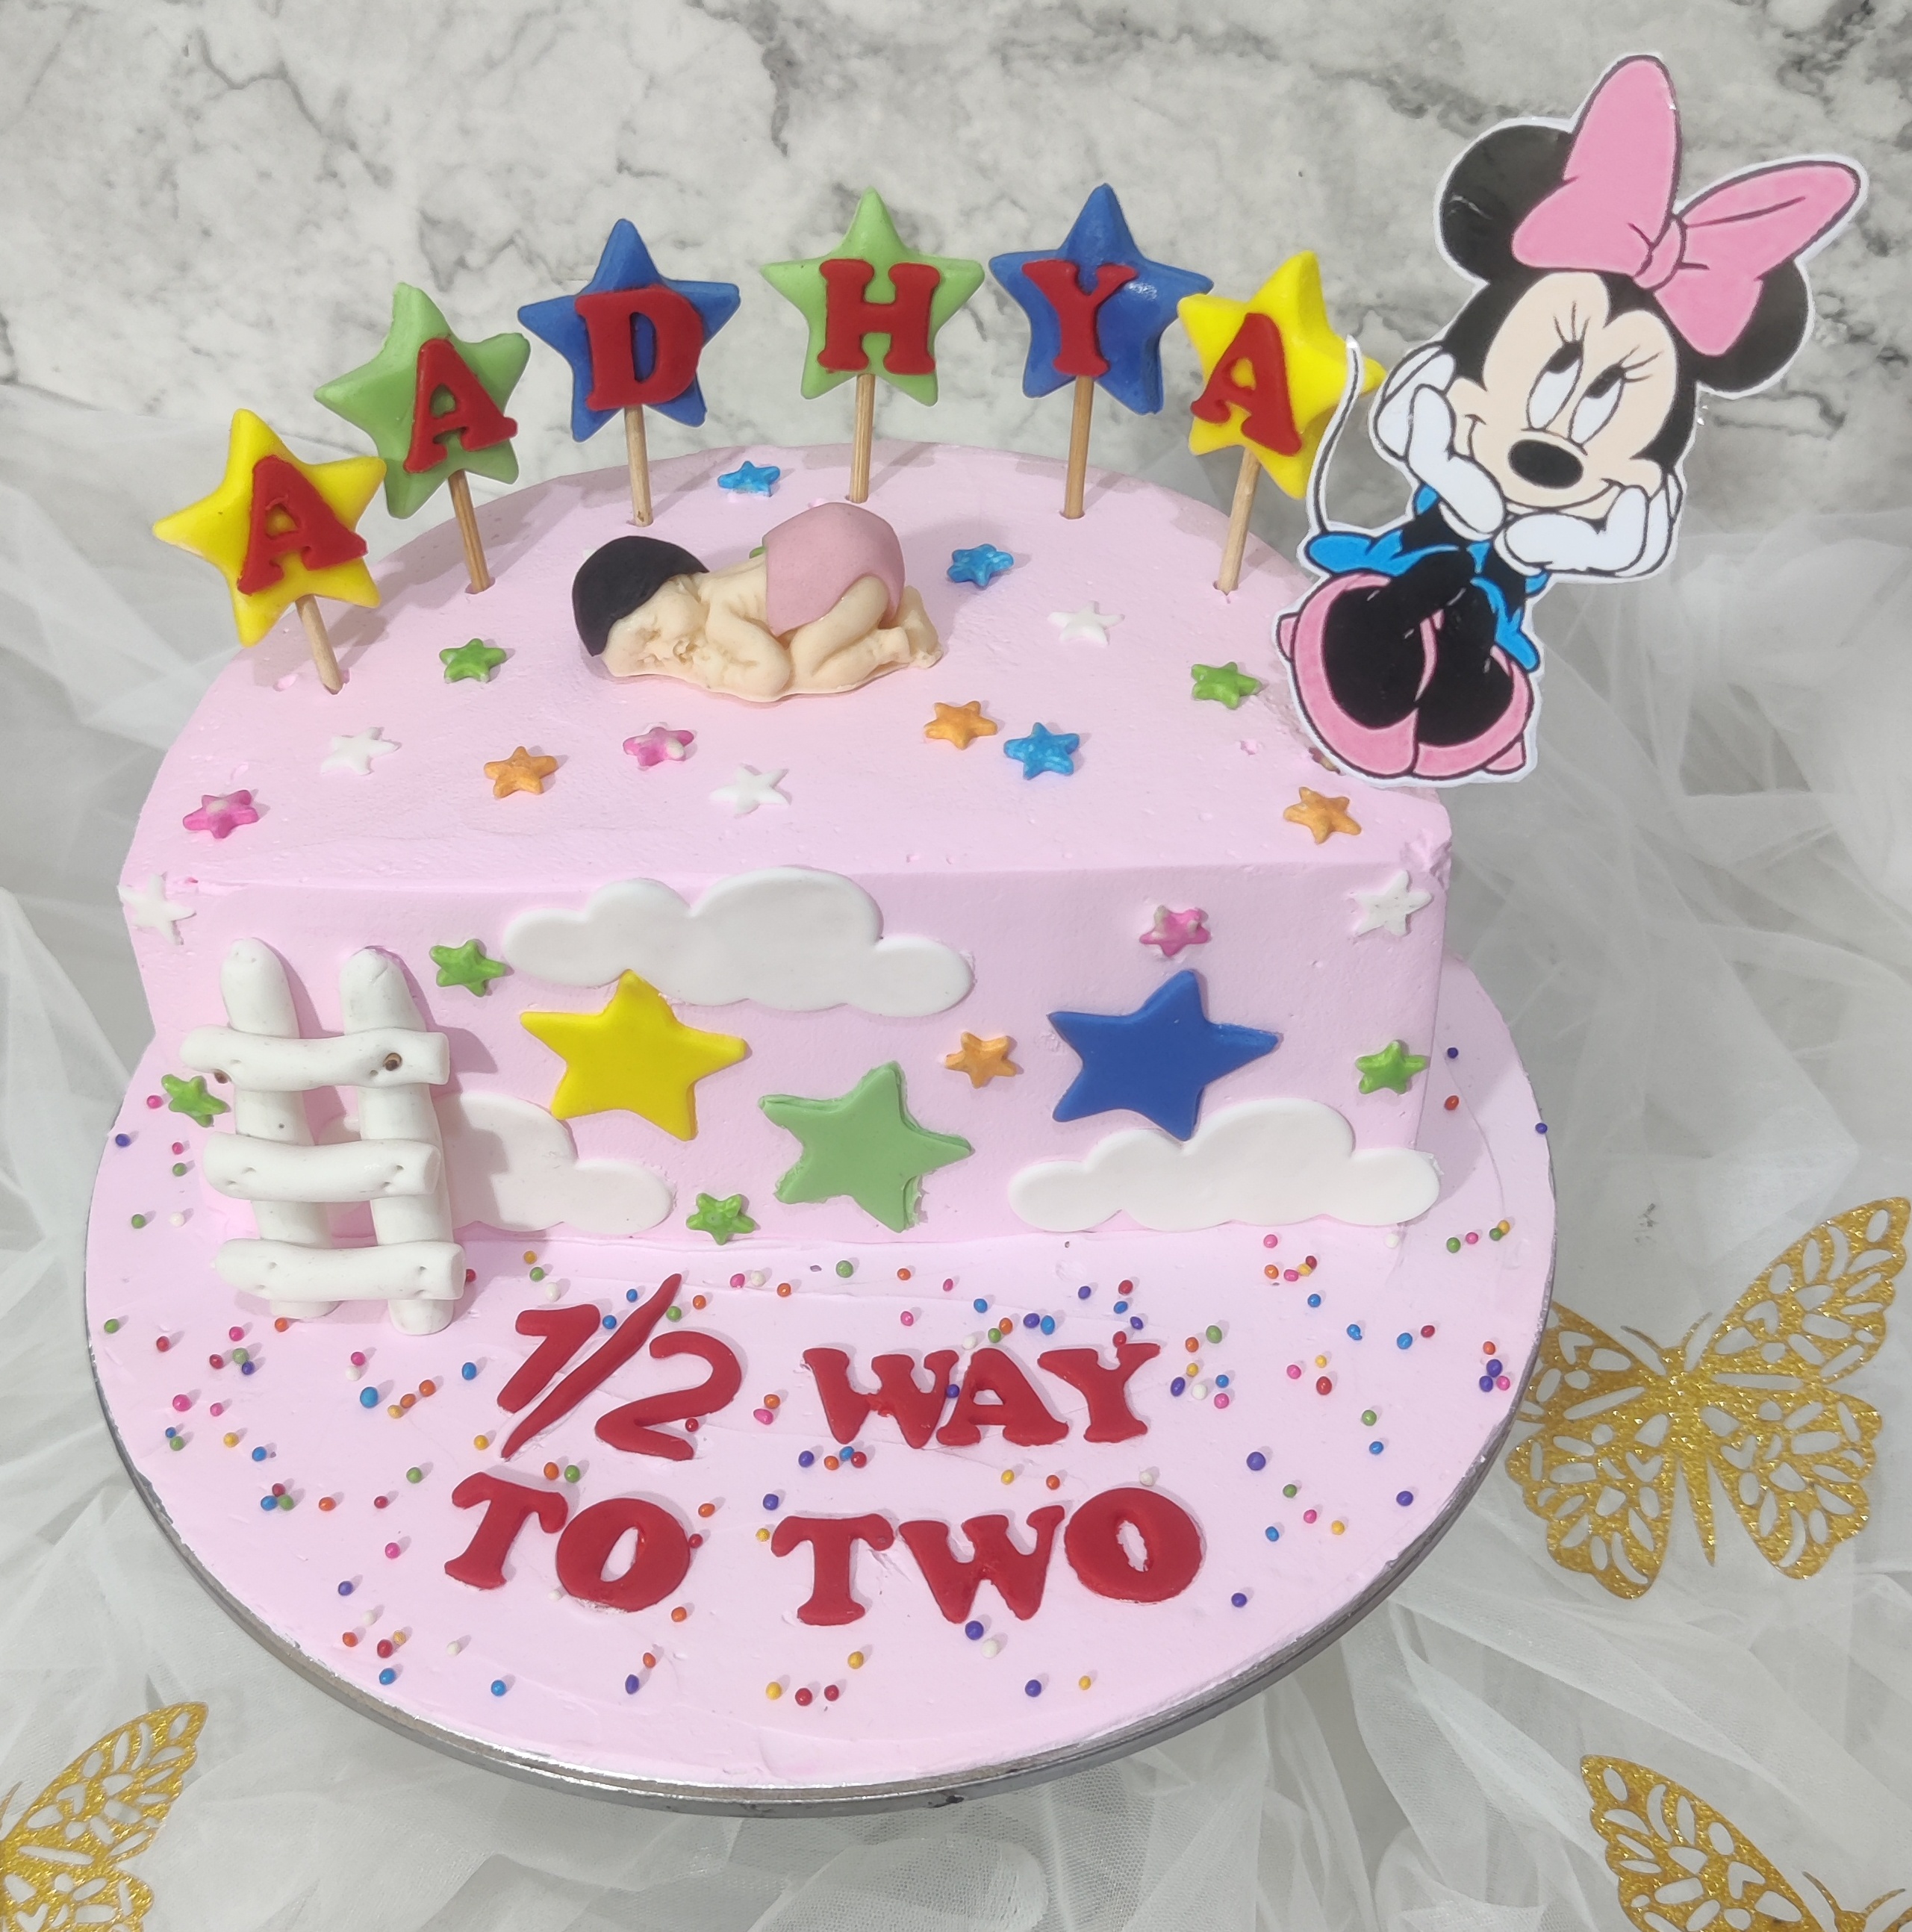 Celebrate Your Half Birthday with a Mini Cake